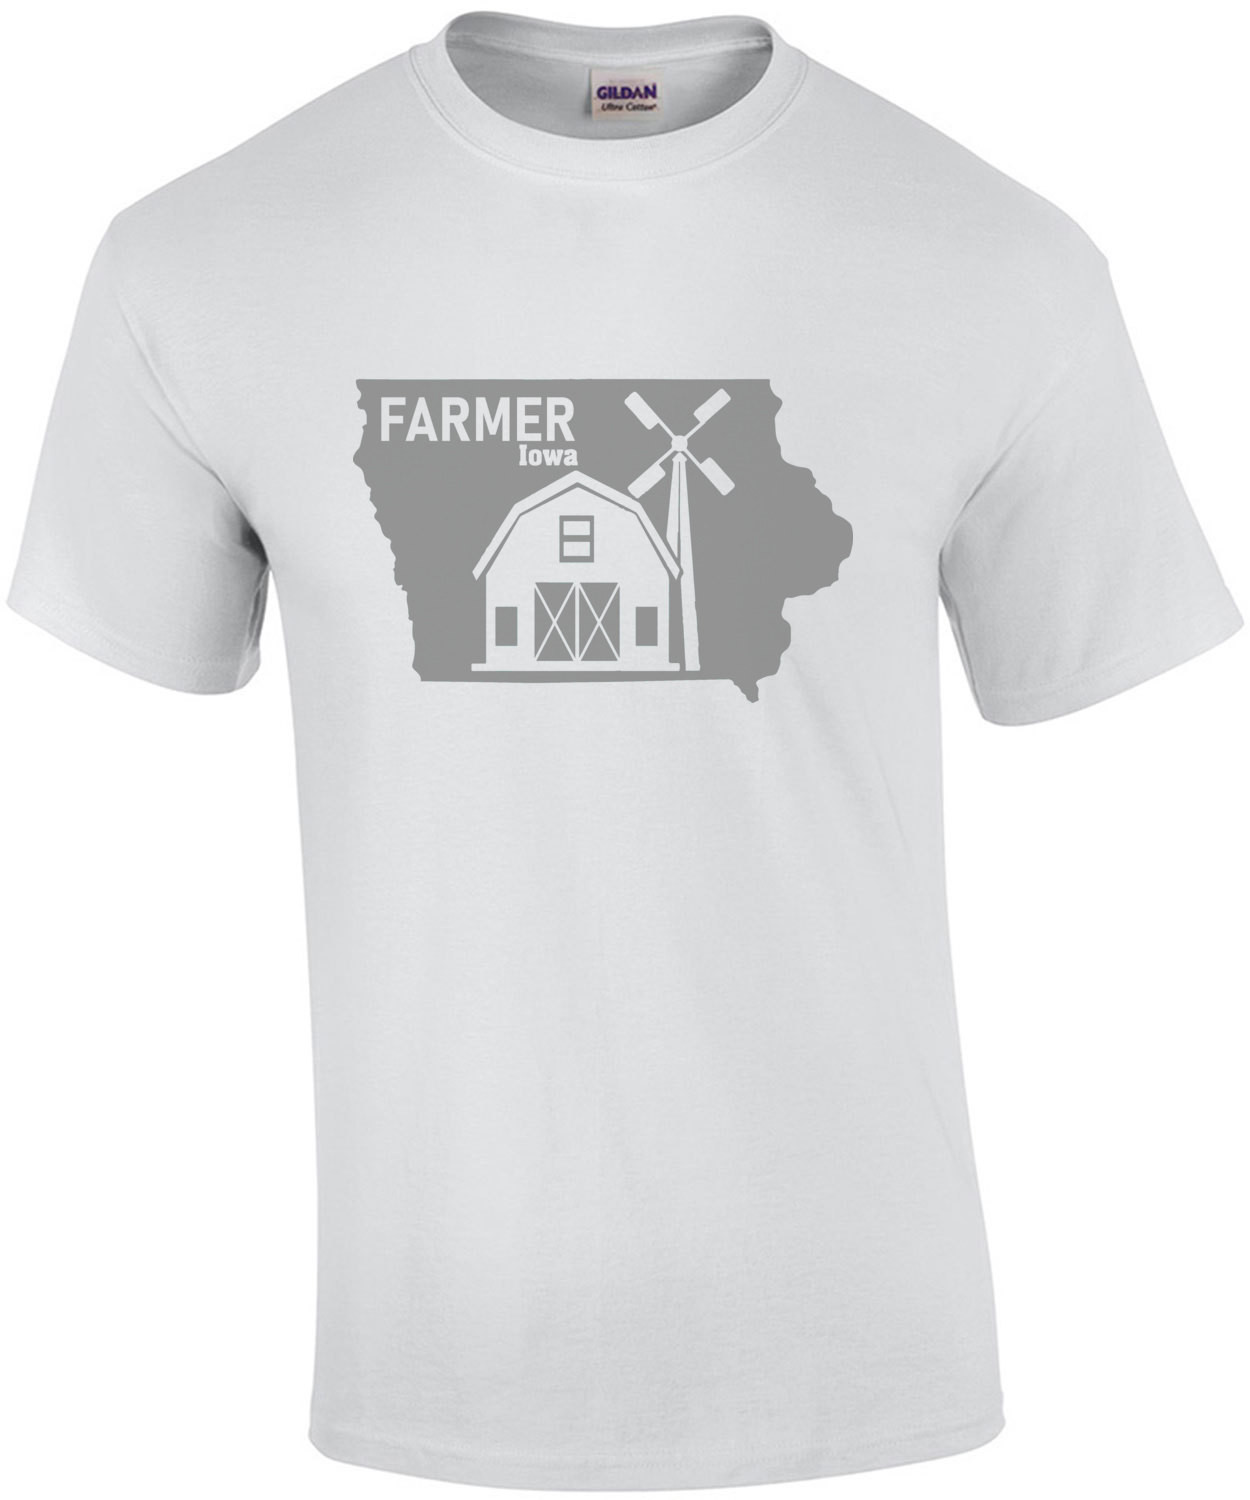 Farmer - Iowa T-Shirt